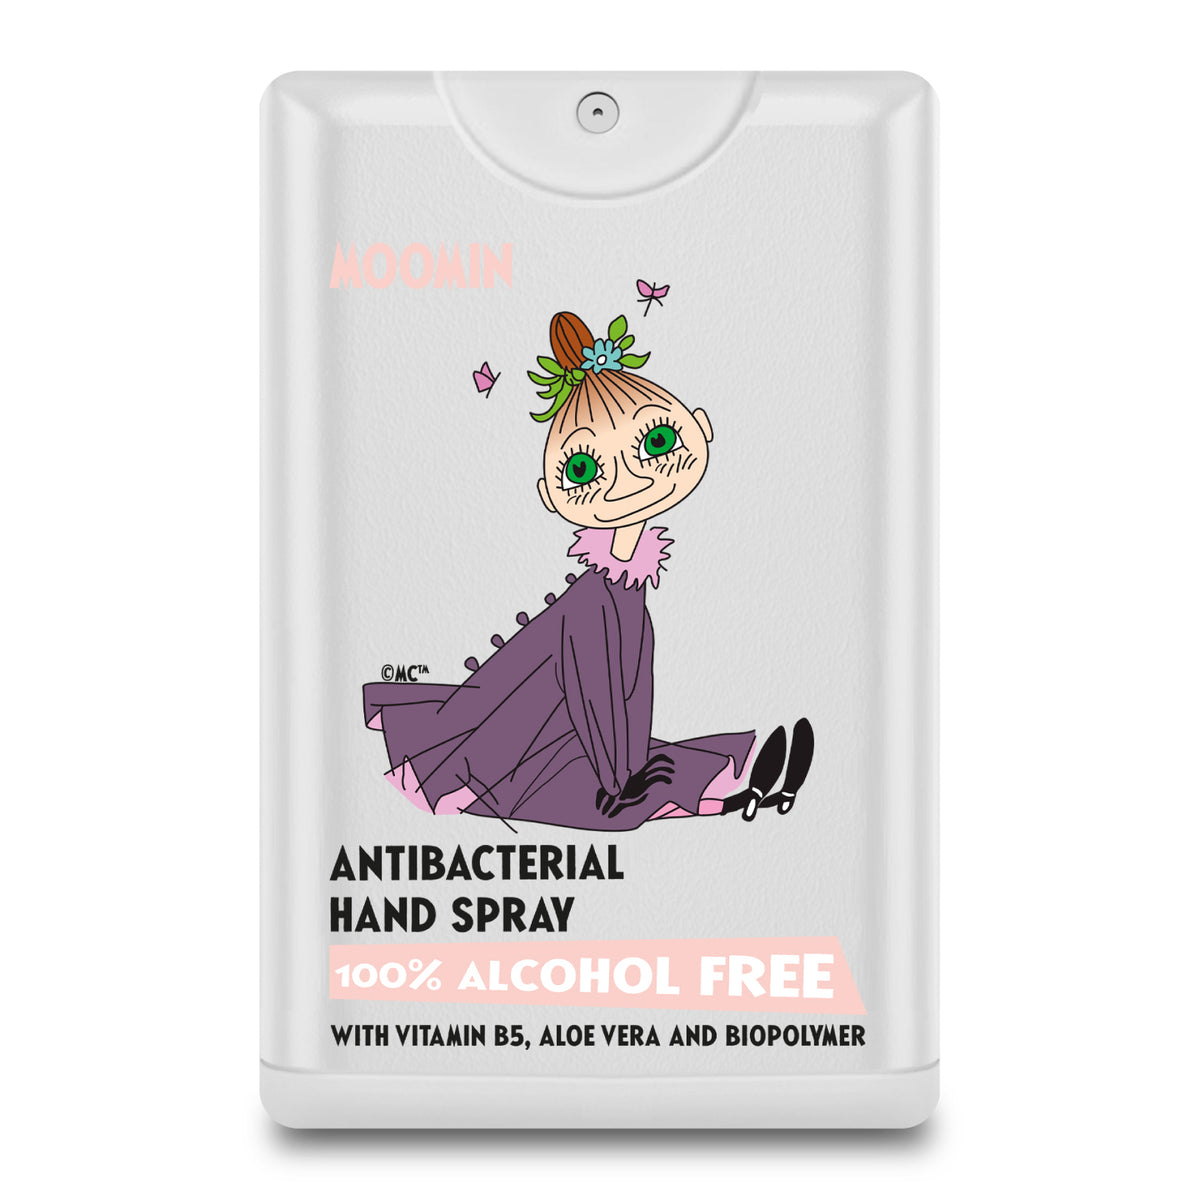 Moomin Hand Sanitizer - of Sweden